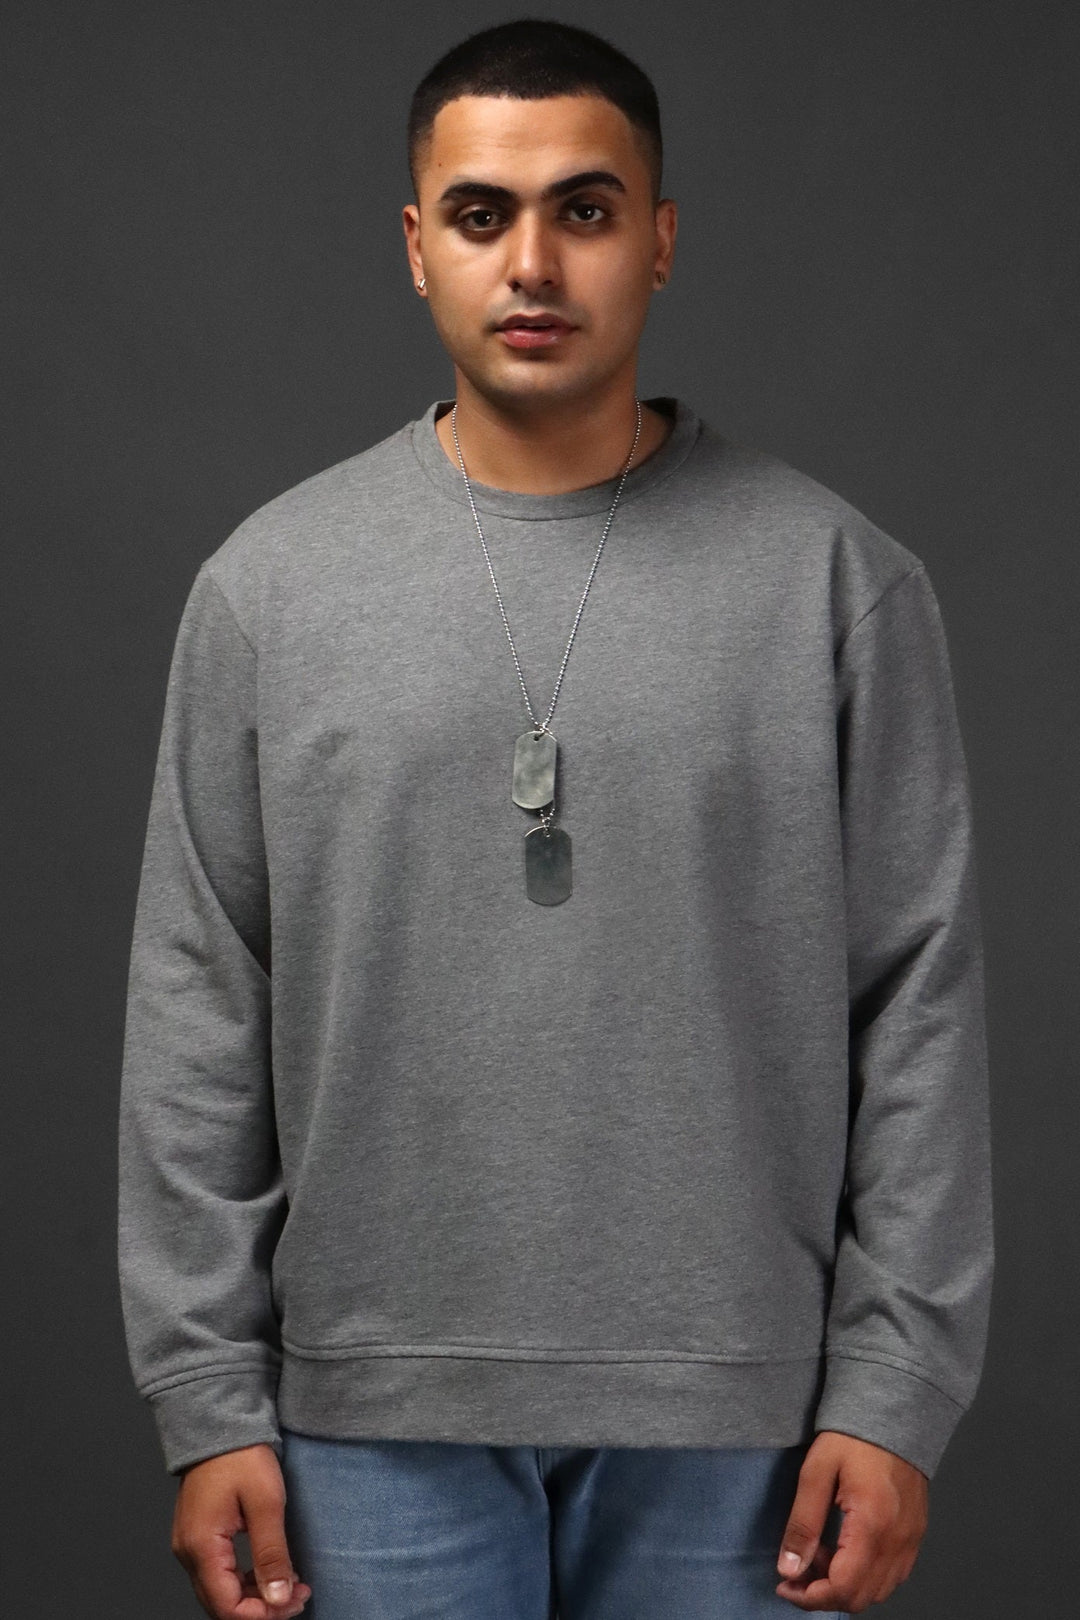 Basic Sweatshirt - Men's Basic Sweatshirt#2